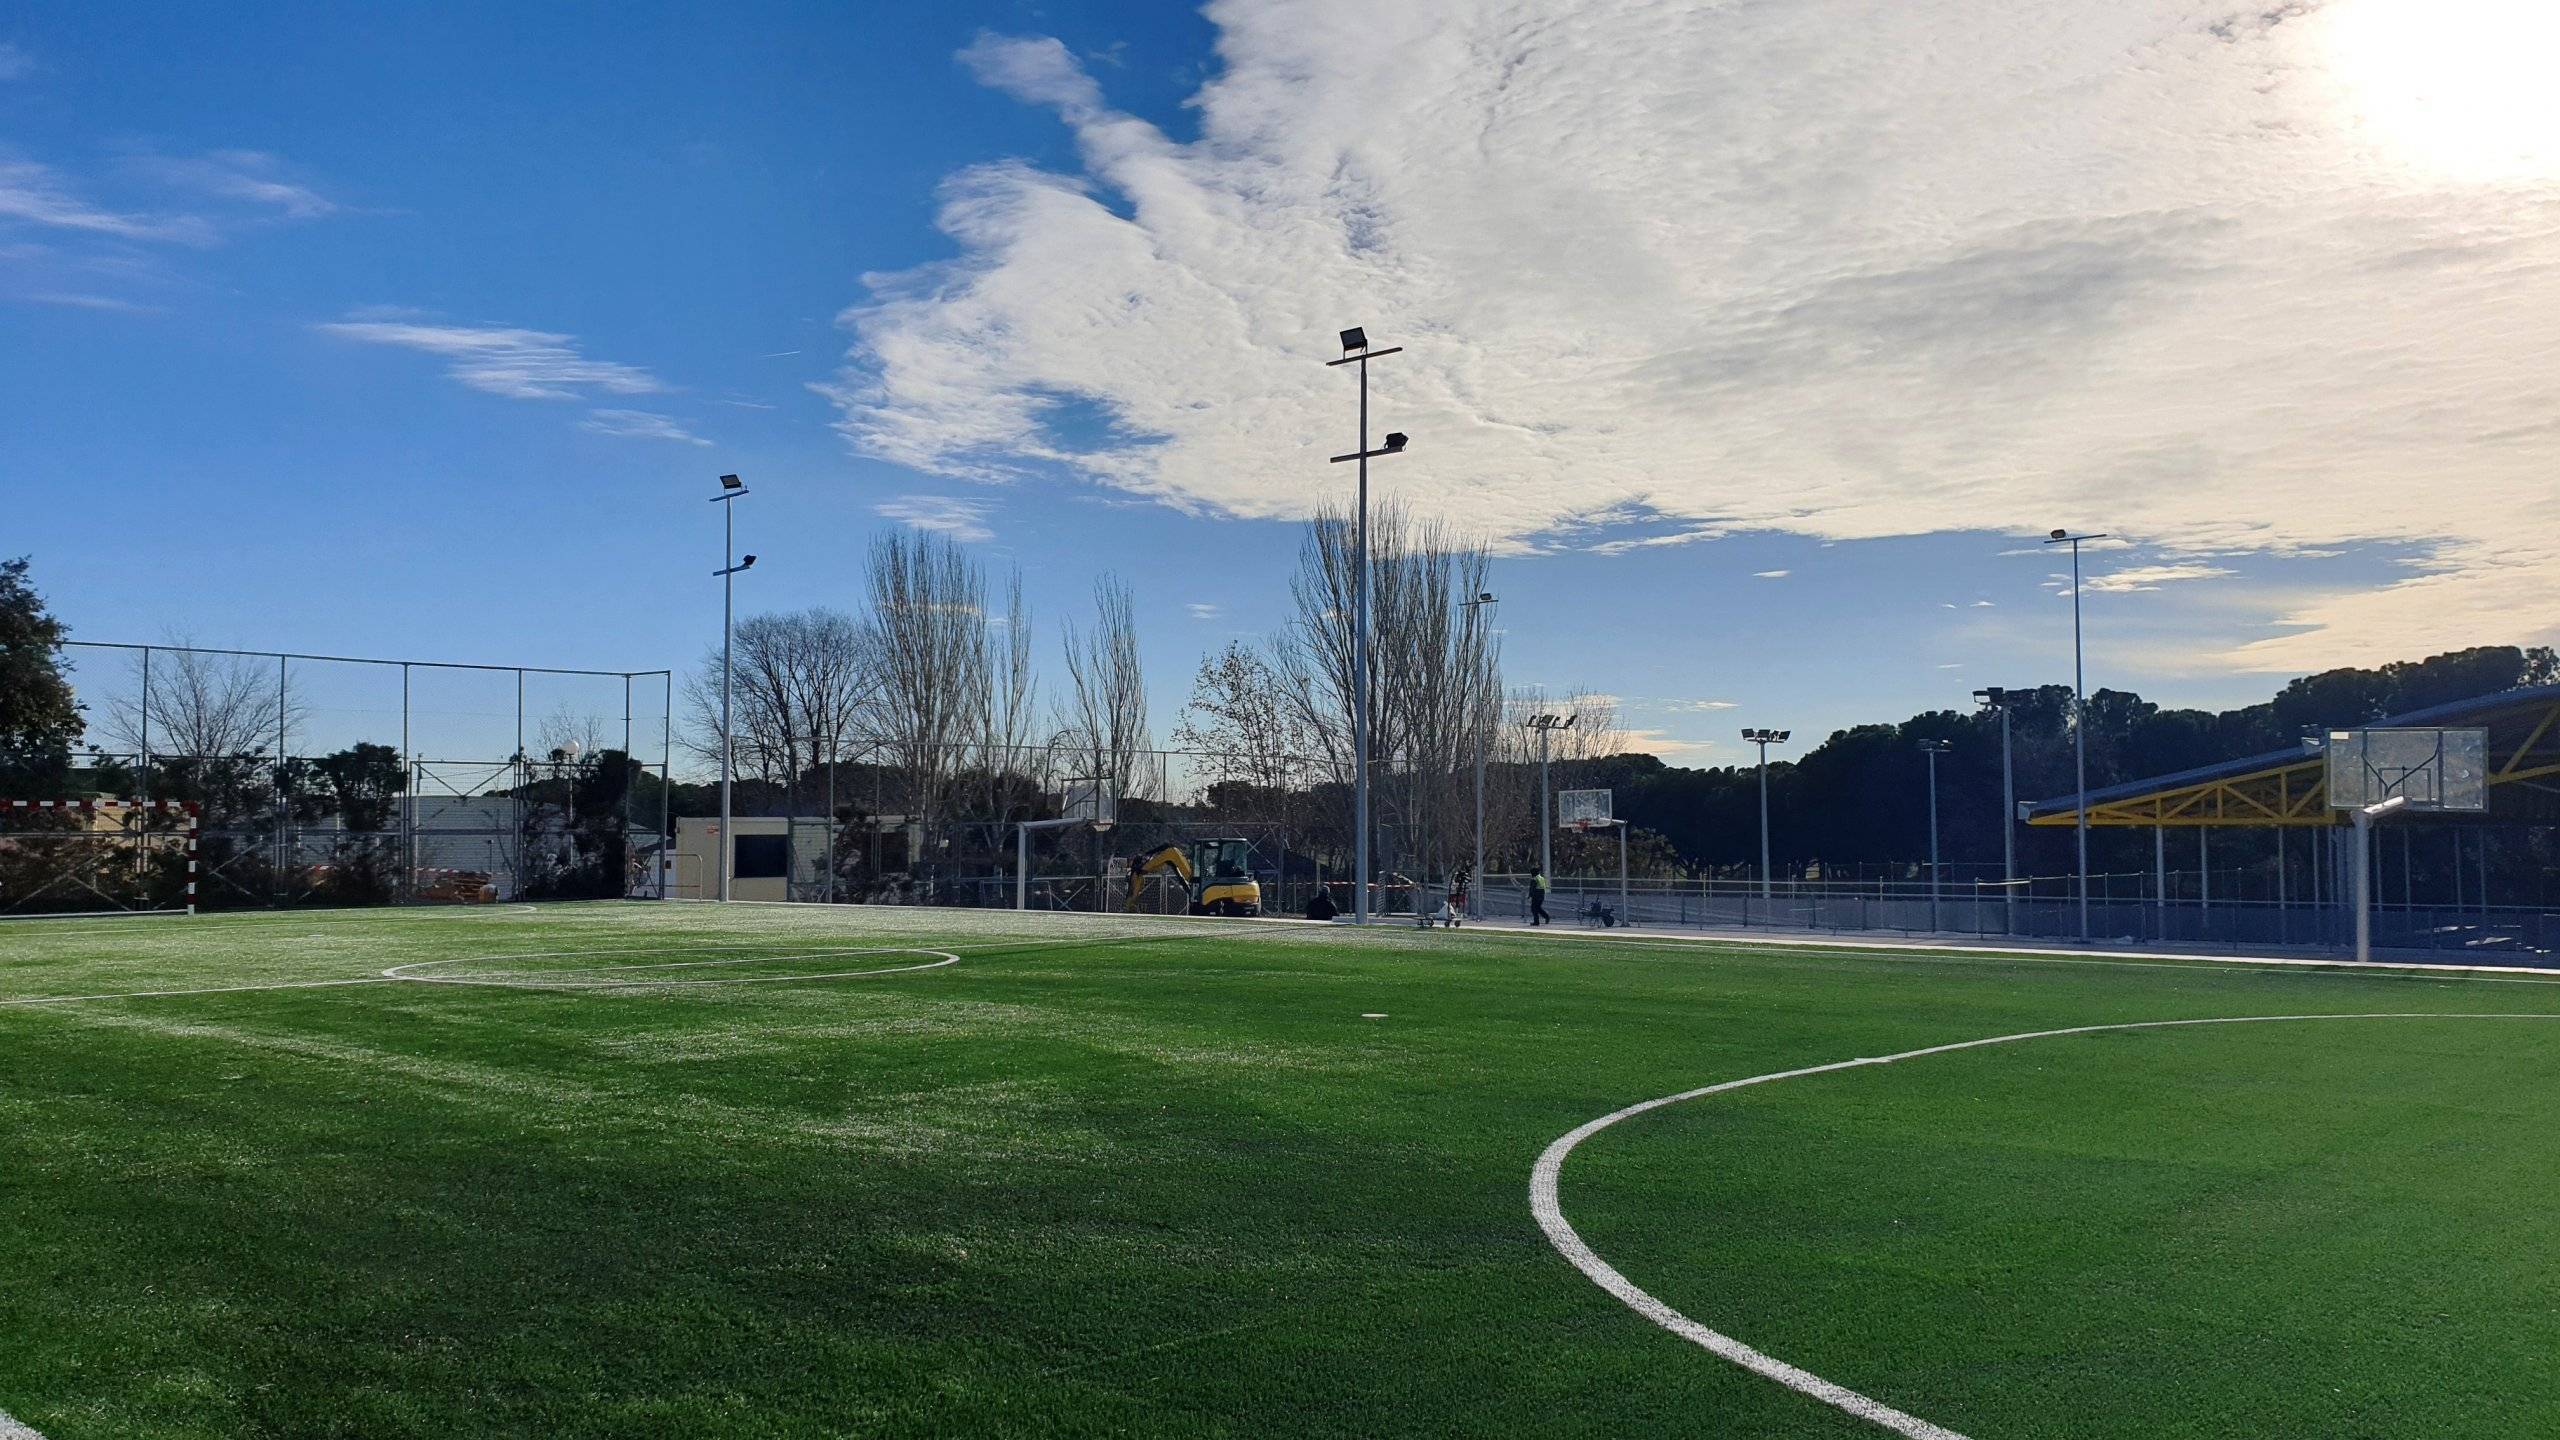 Campo de fútbol sala de césped artificial.